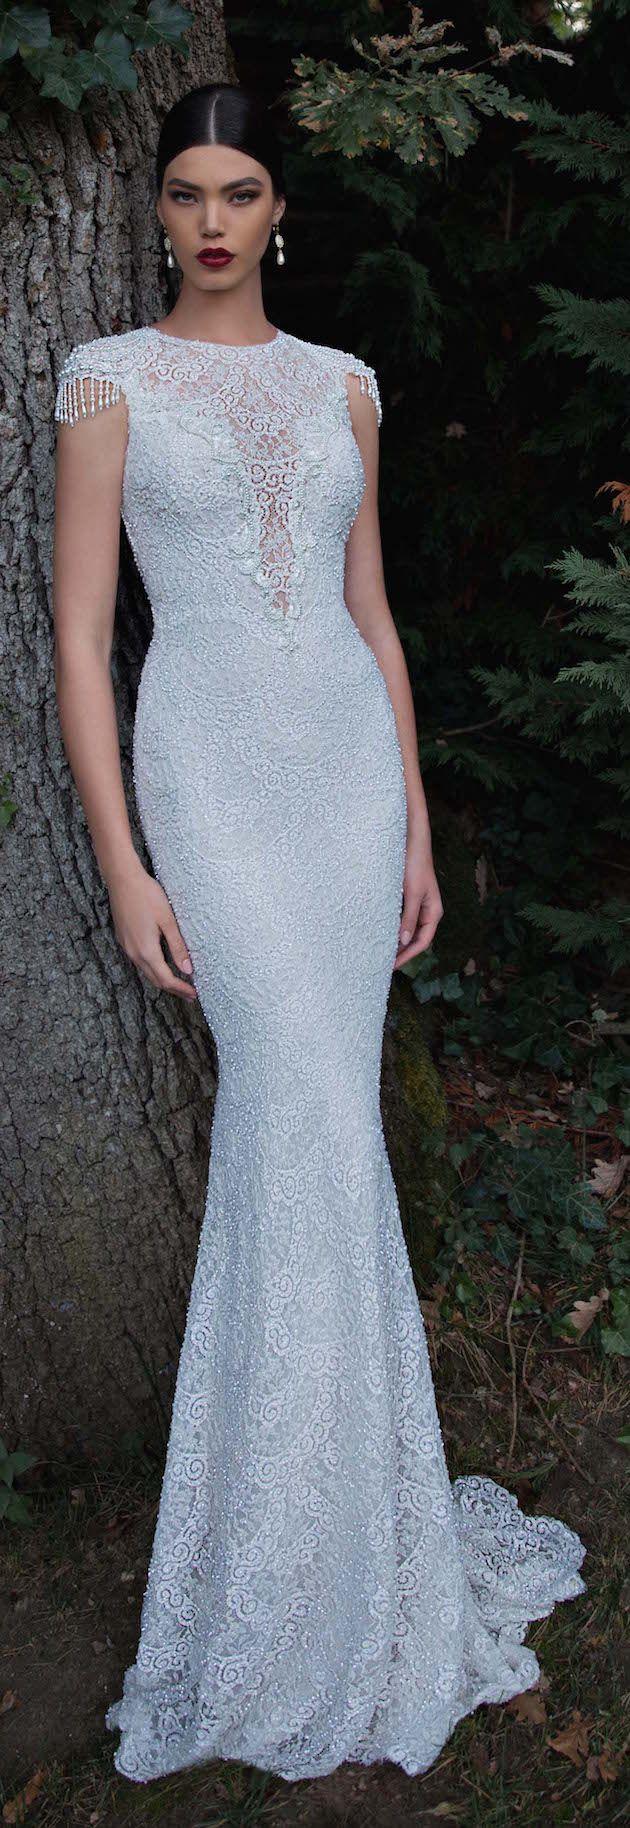 Wedding - Stunning Berta Wedding Dress Collection 2015 (Part 1)